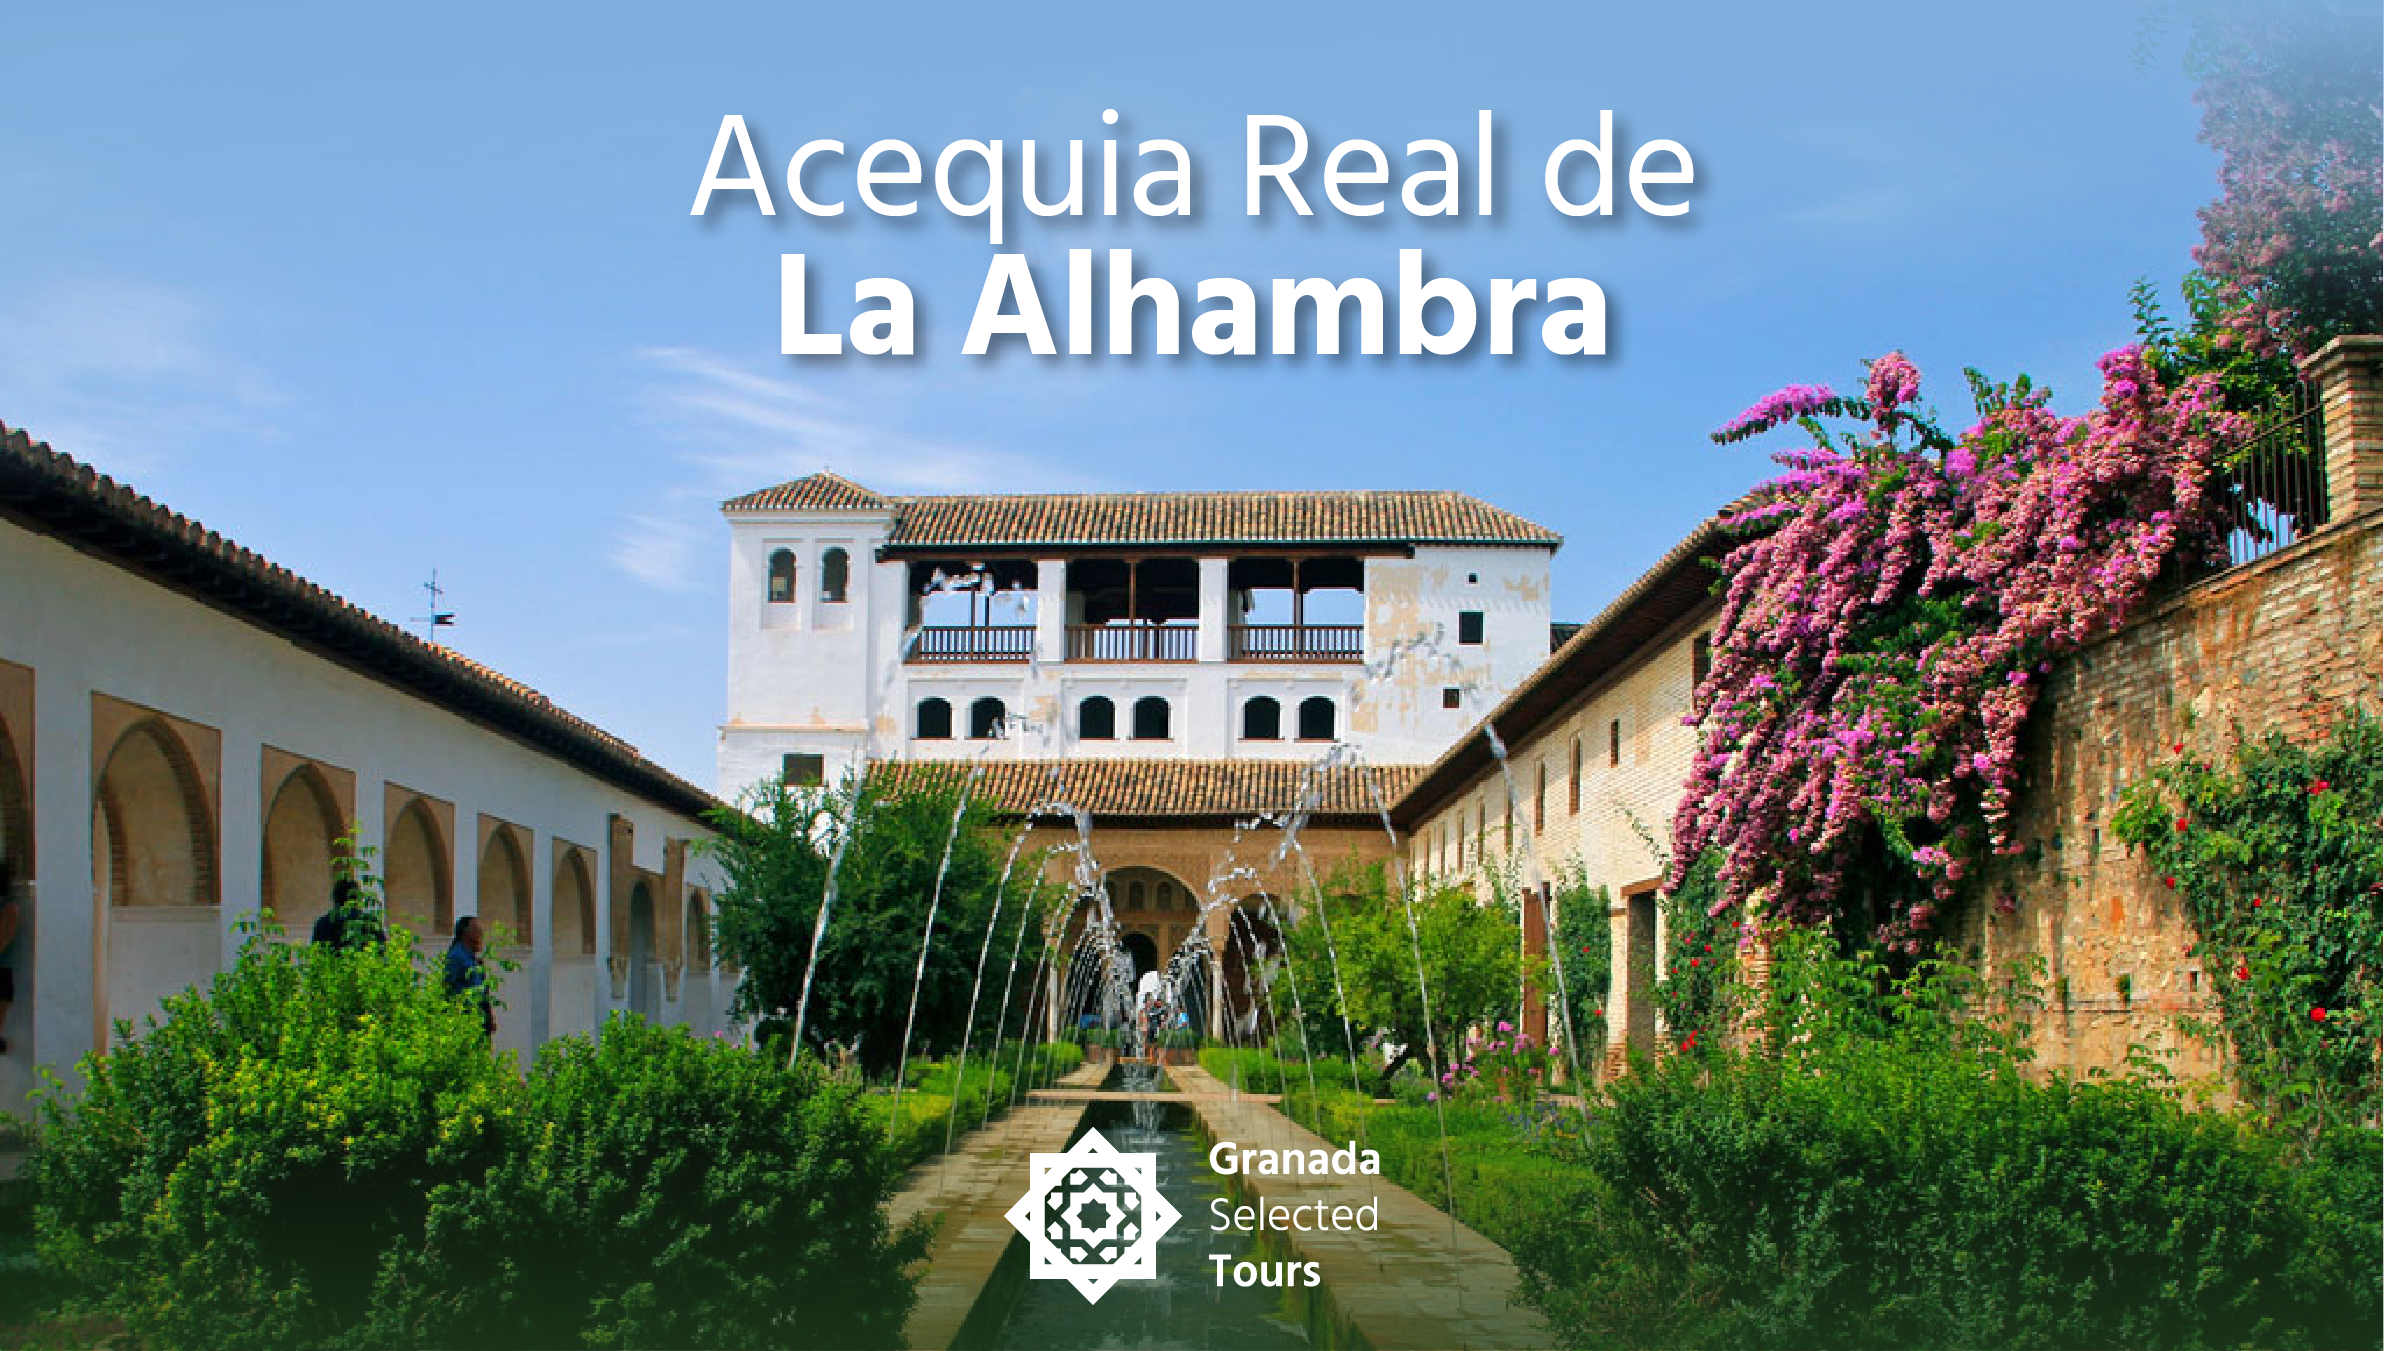 Acequia Real de la Alhambra